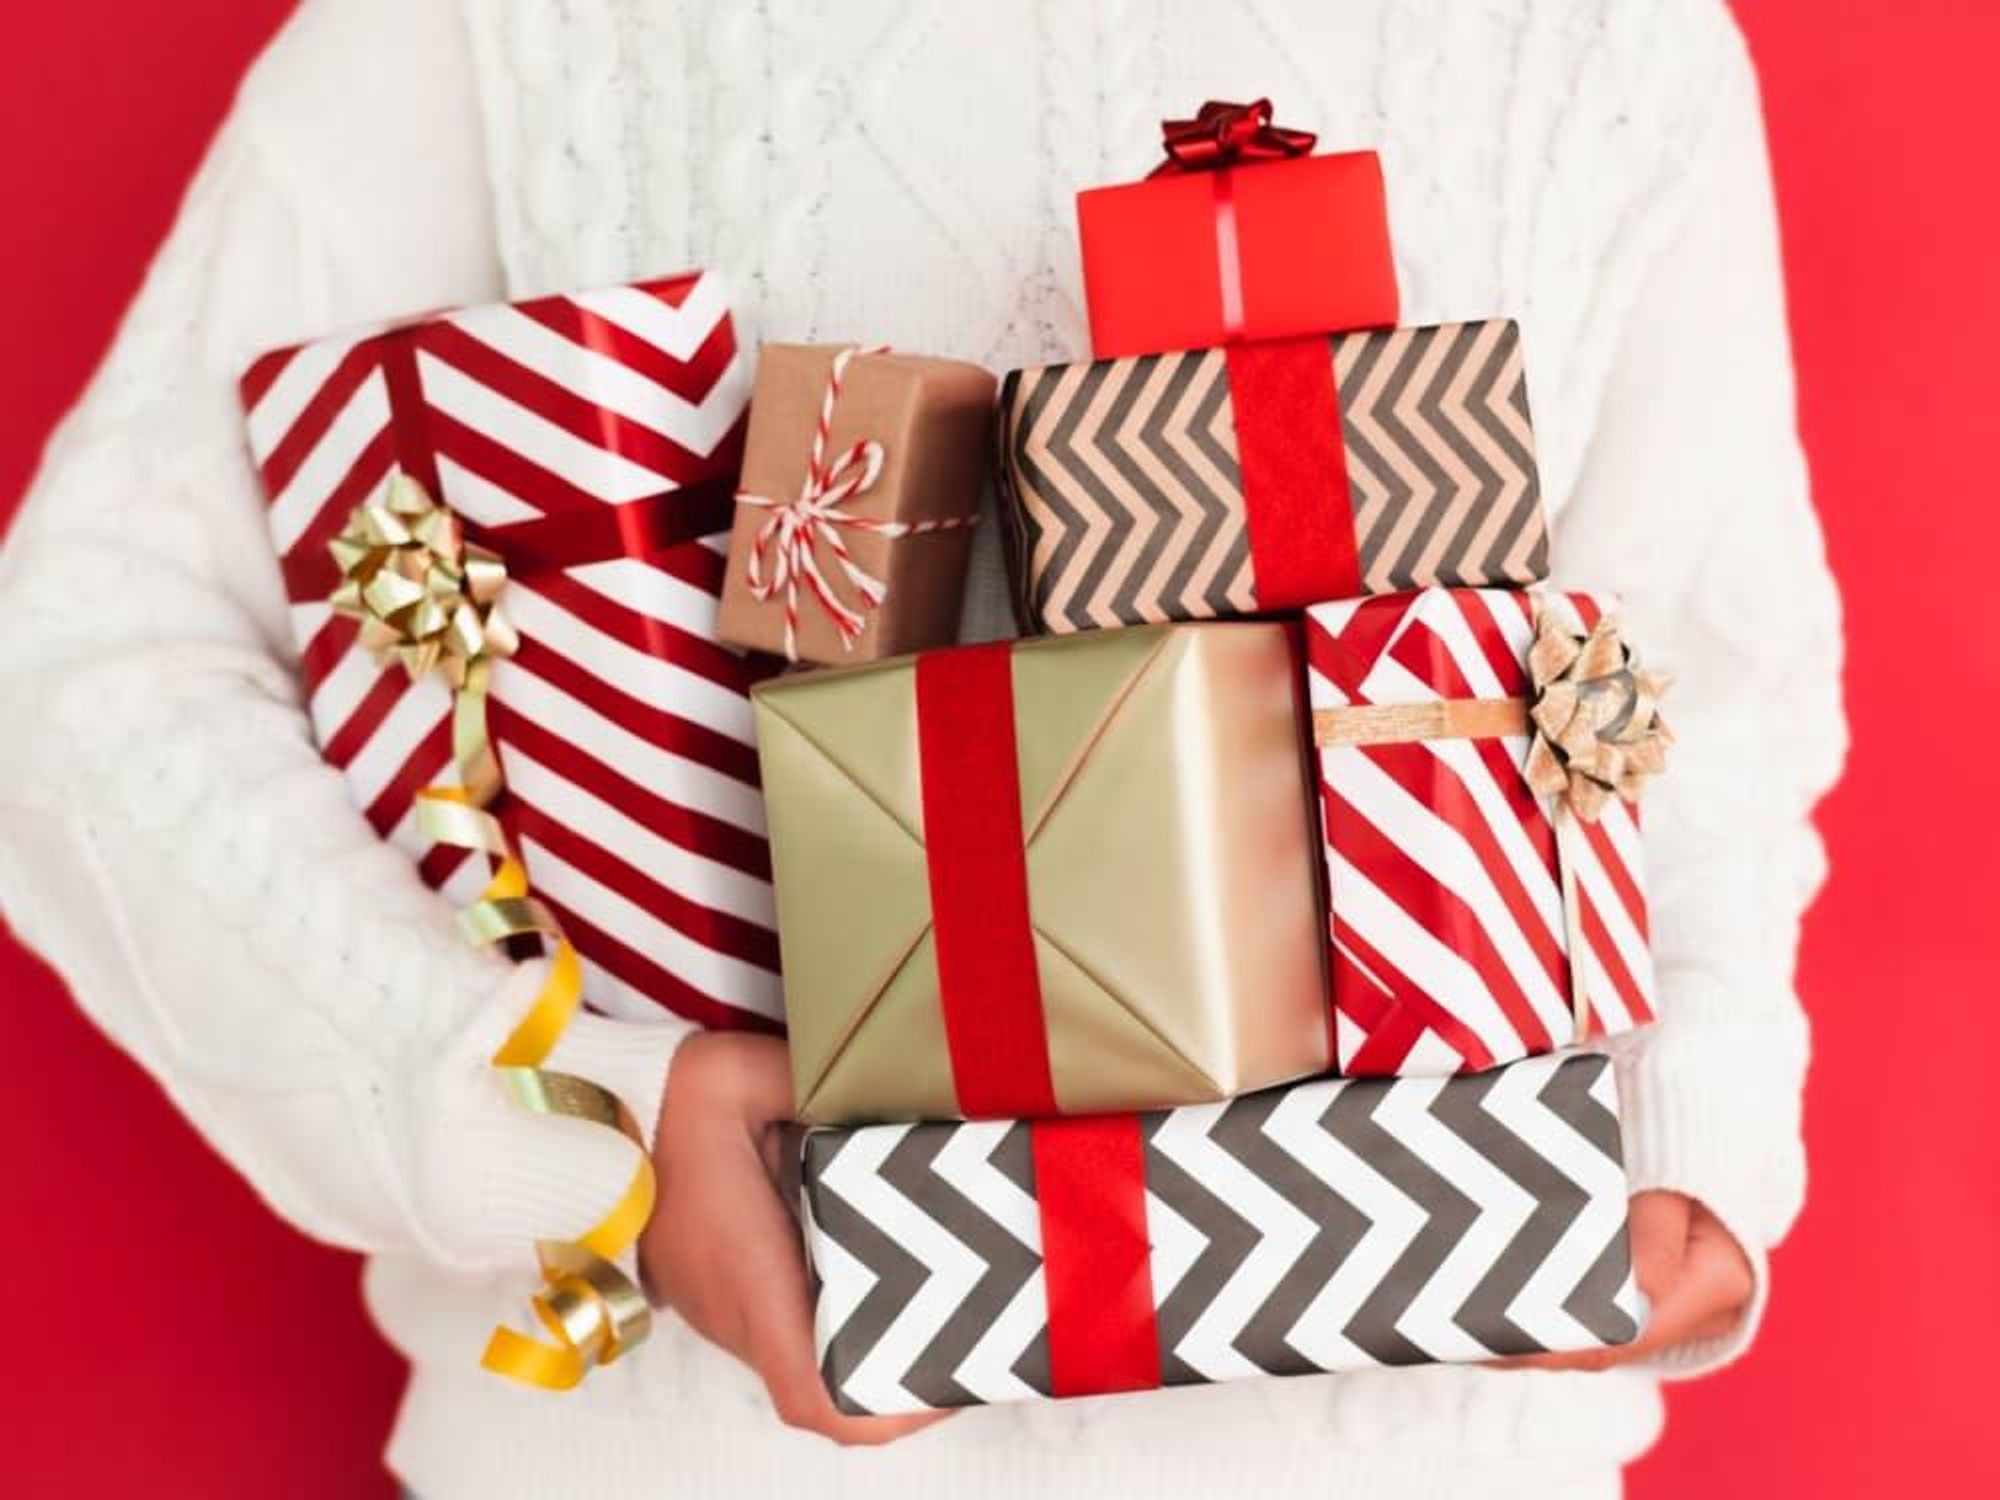 Christmas holiday shopping, presents, gifts